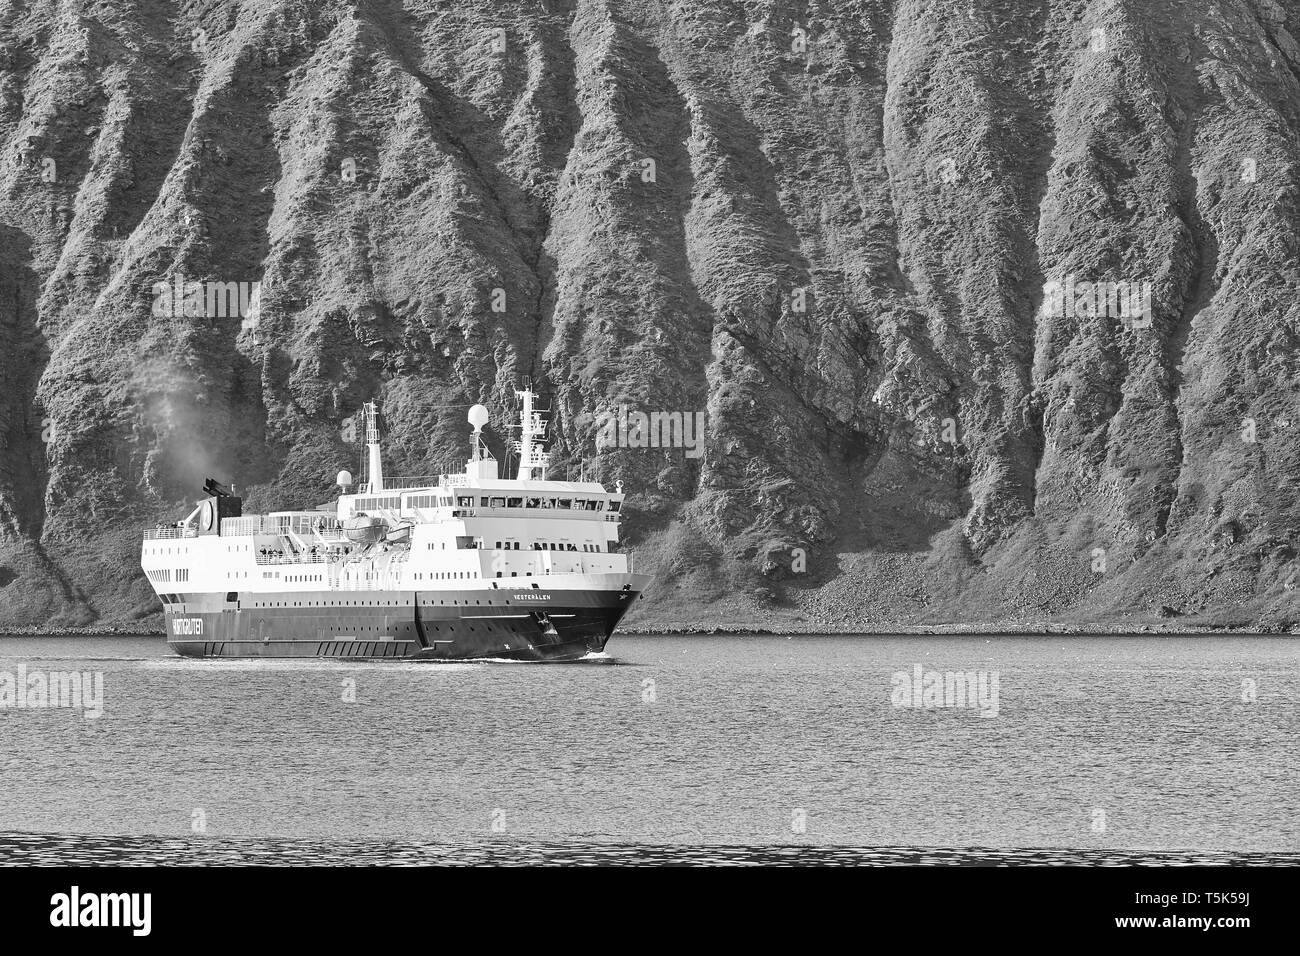 The Hurtigruten Ferry, MS Vesterålen Approaching The Norwegian Fishing Community Of Honningsvåg, The Tall Side Of The Fjord Dwarf The Ship. Stock Photo